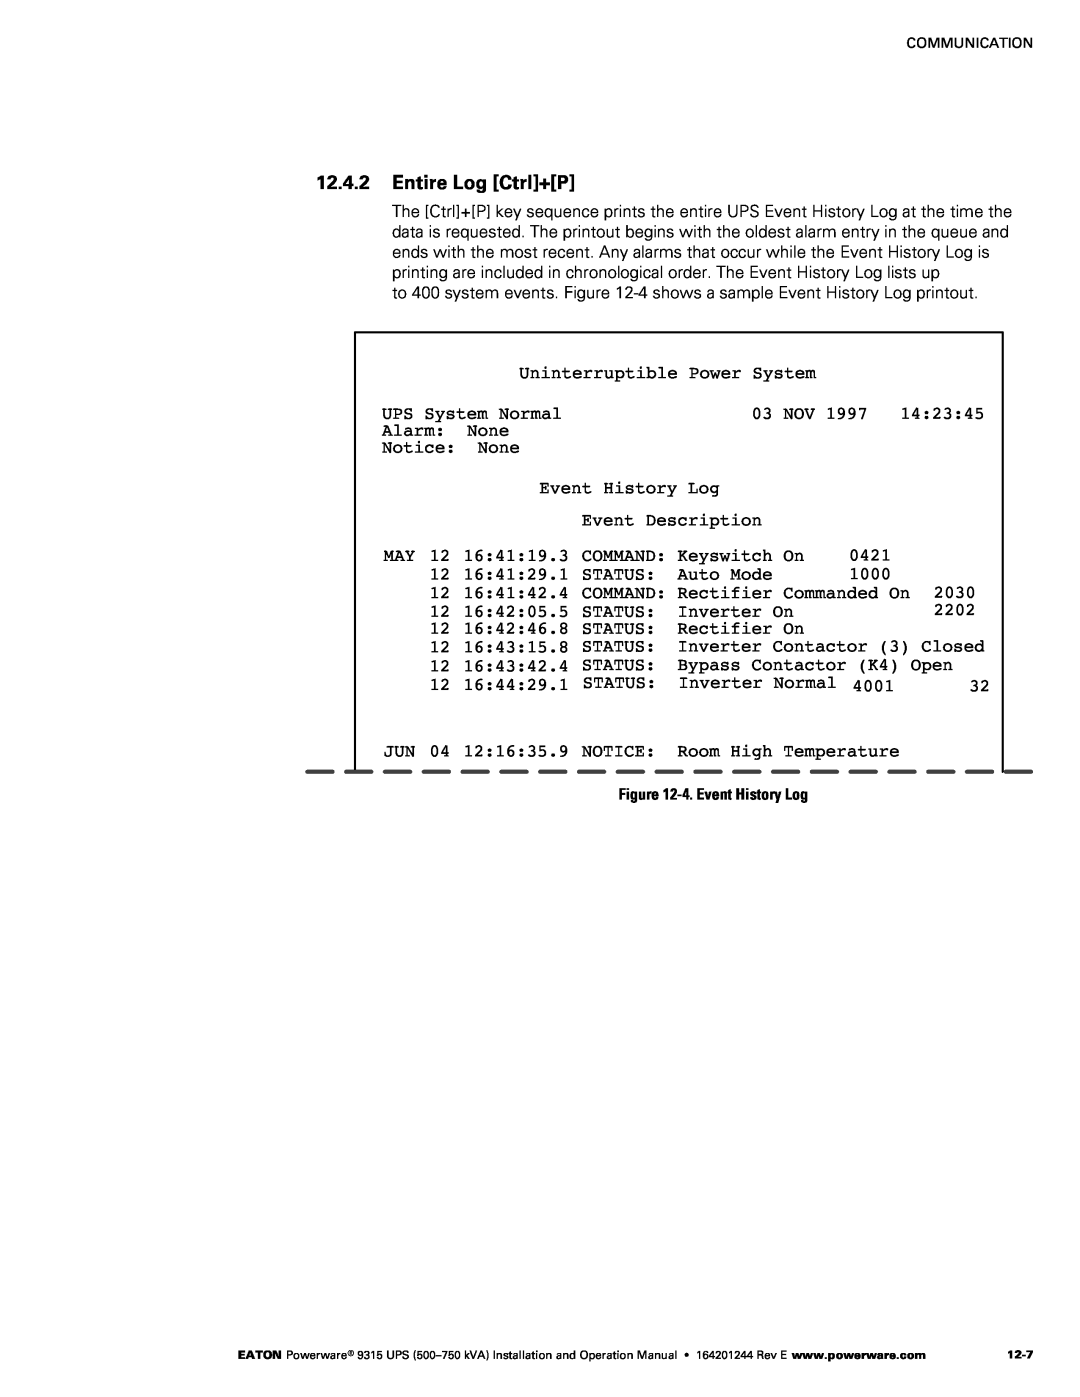 Powerware Powerware 9315 operation manual Entire Log Ctrl+P, ‐4. Event History Log 